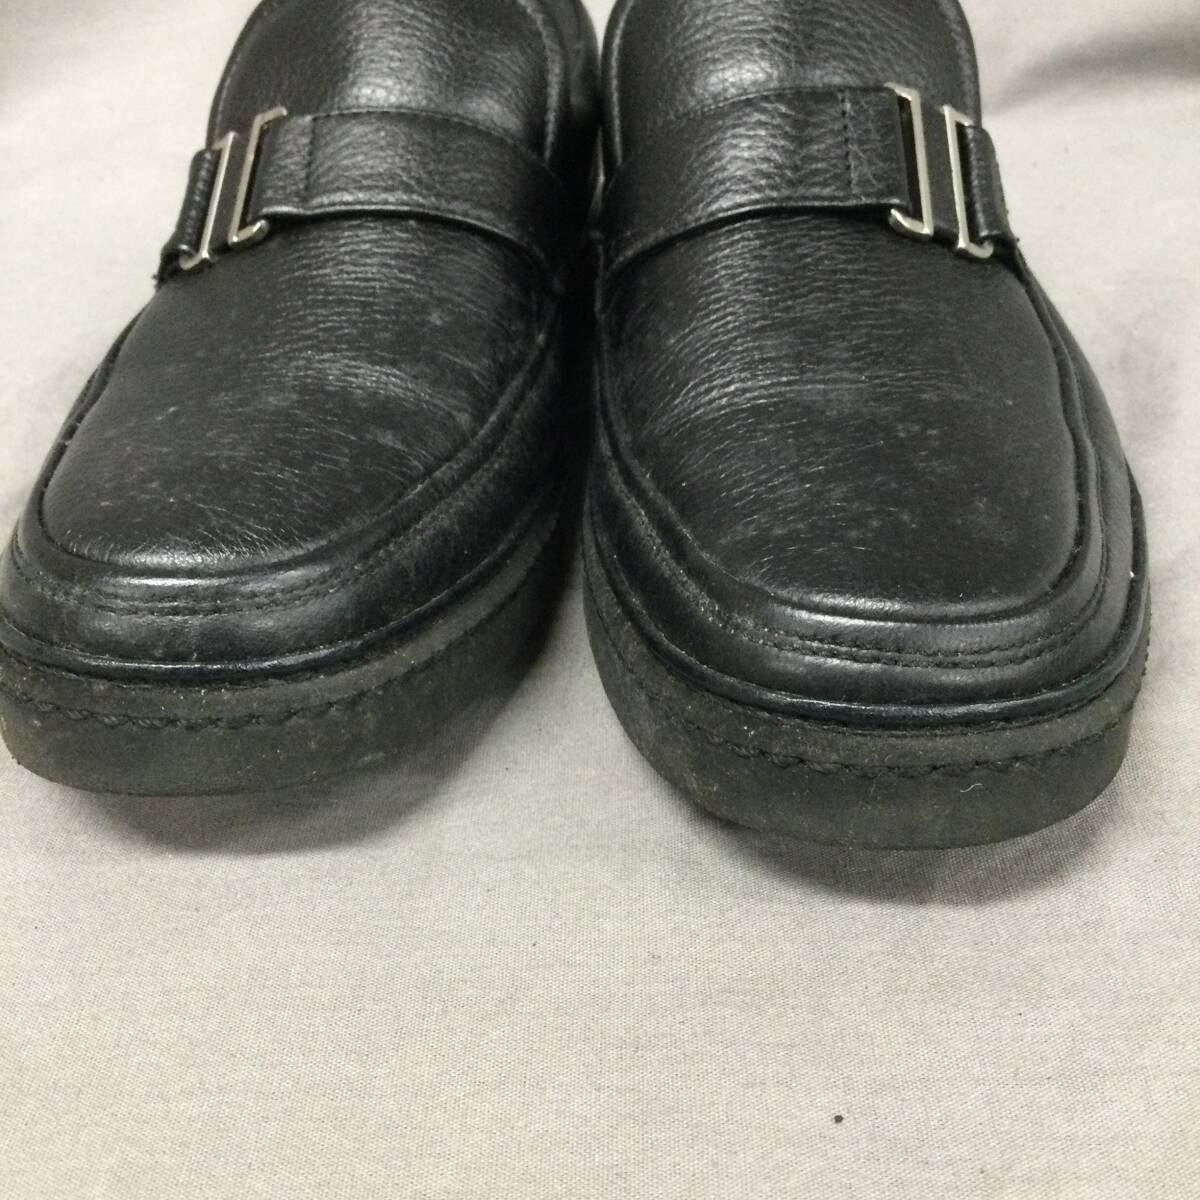 060321 261061-2 DAKS ダックス サイズ 23.5EEE レディース ブラック 靴の画像7